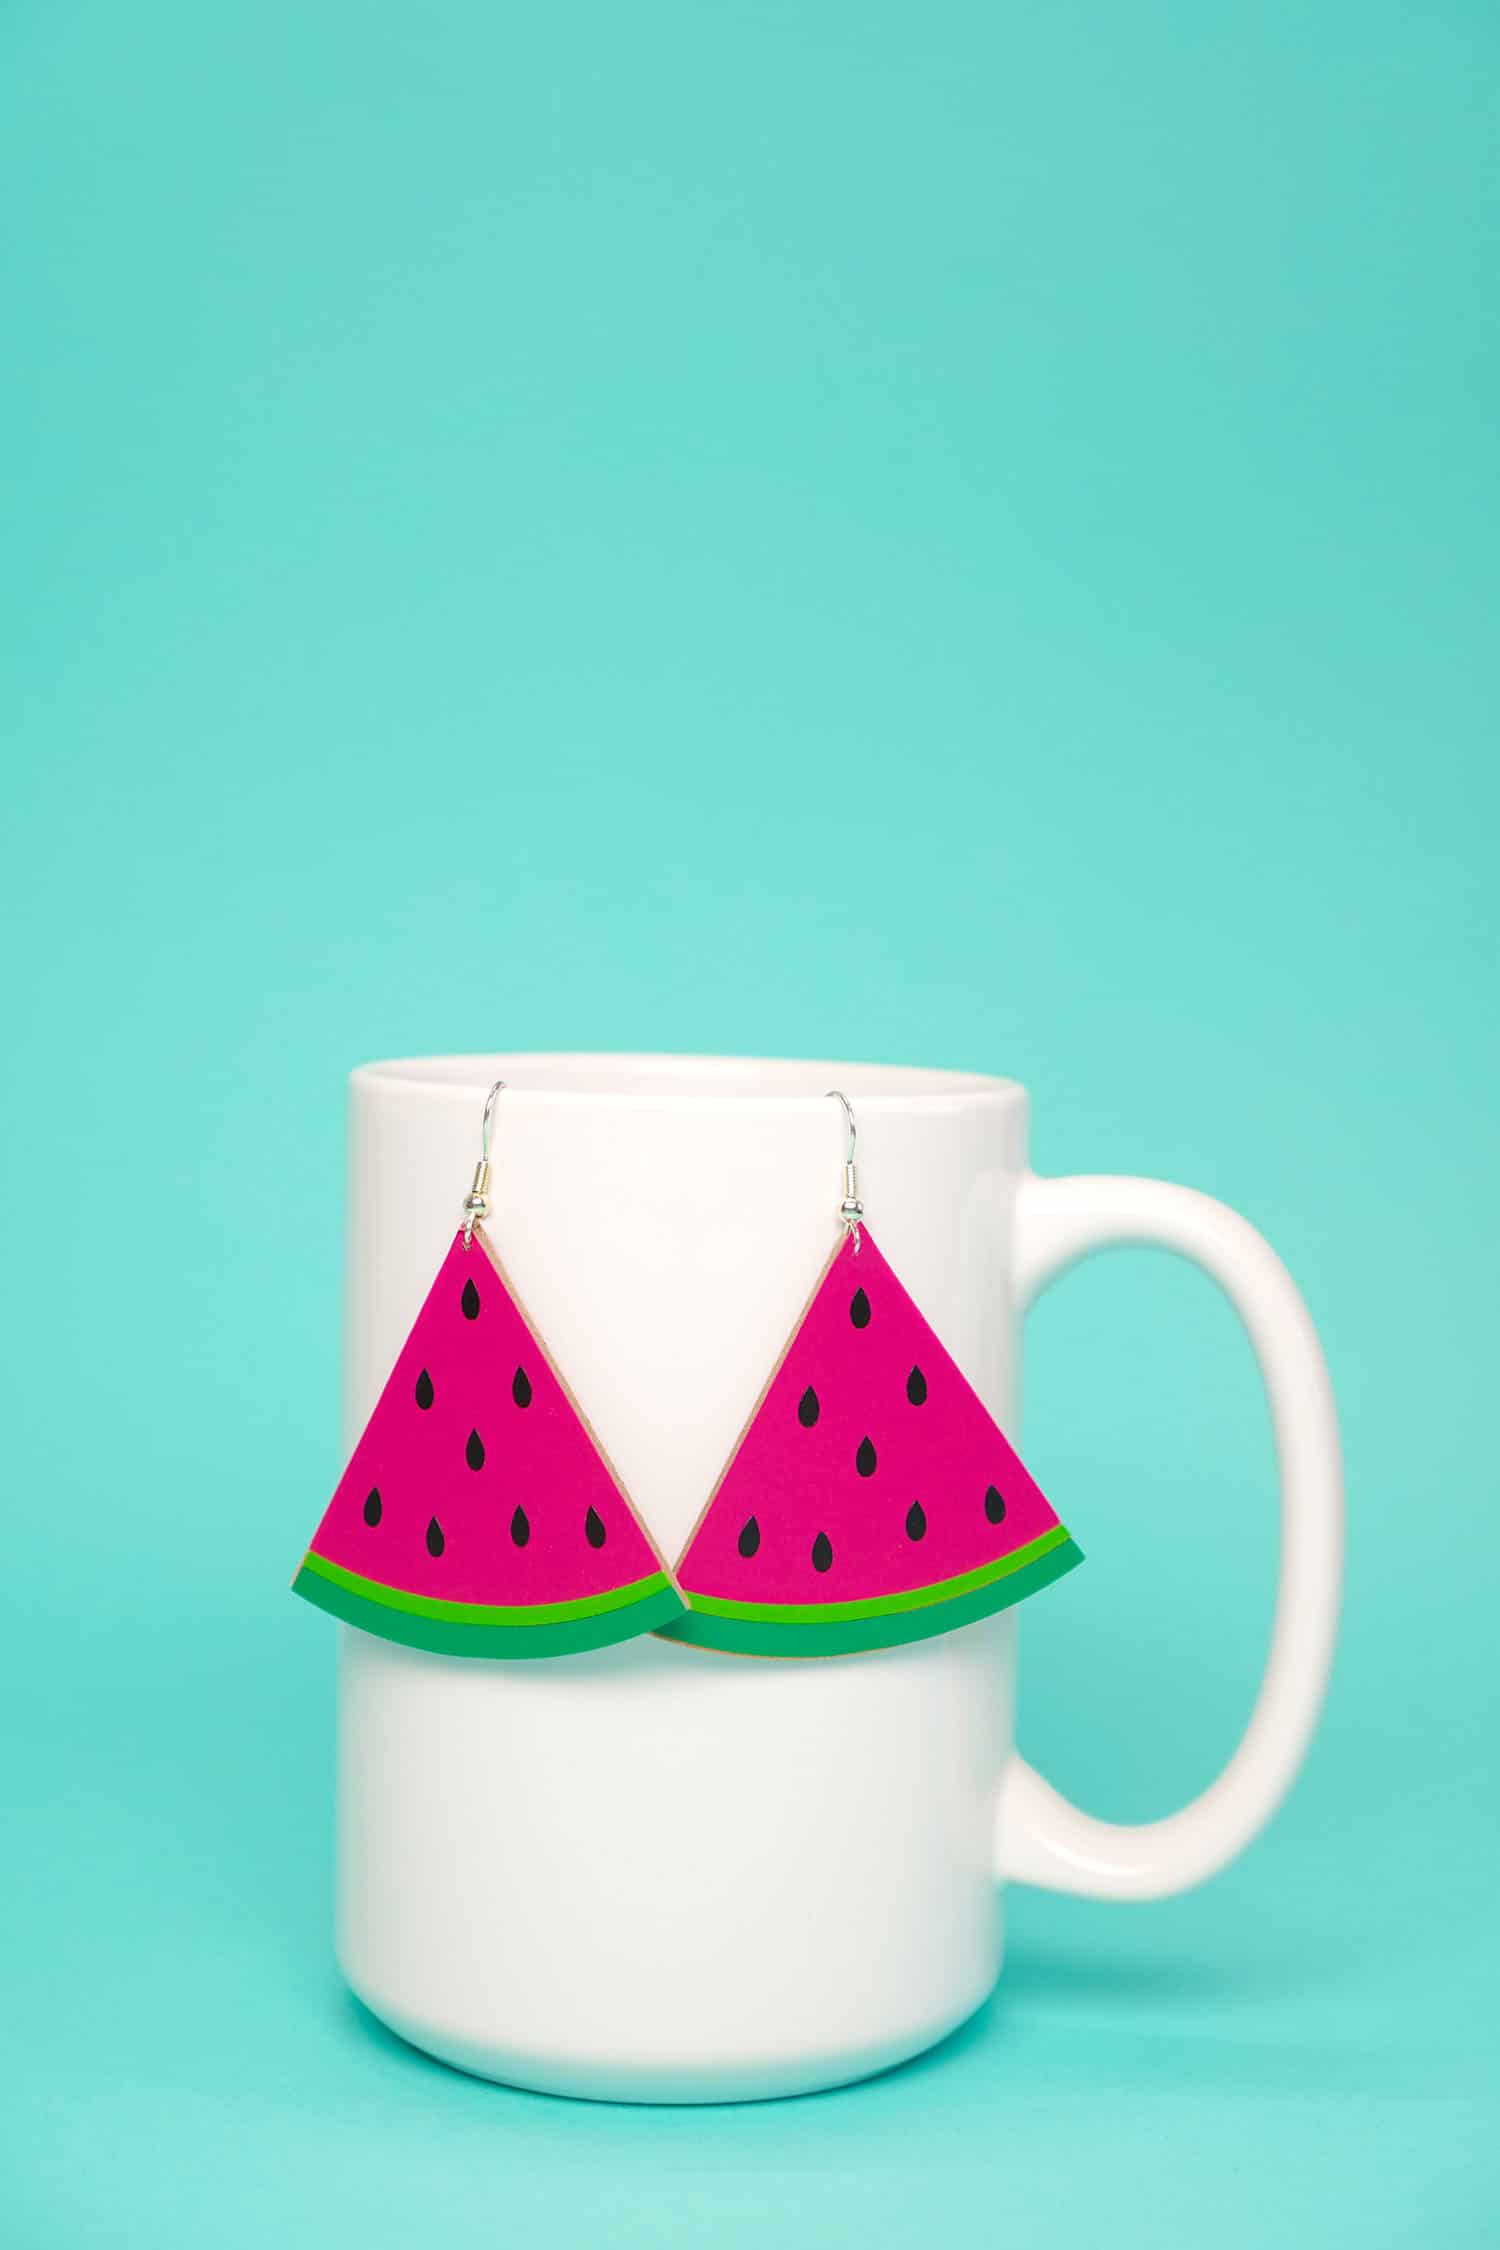  watermelon slice earrings on mug